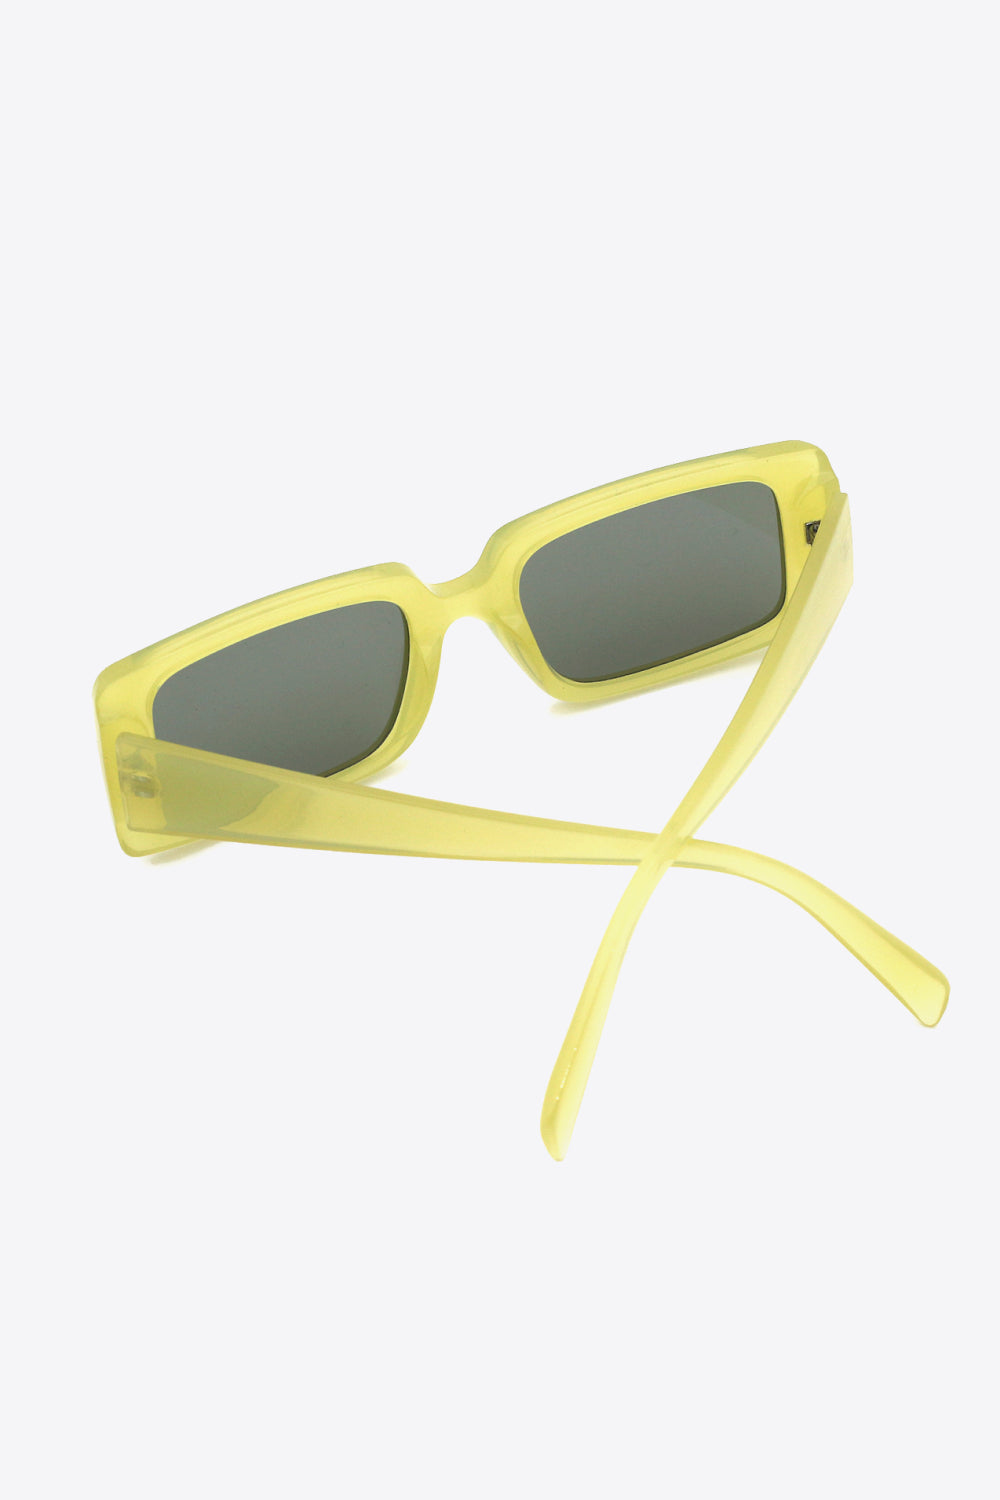 Liquid Sky Chartreuse Lucite 70s Rectangle Sunglasses